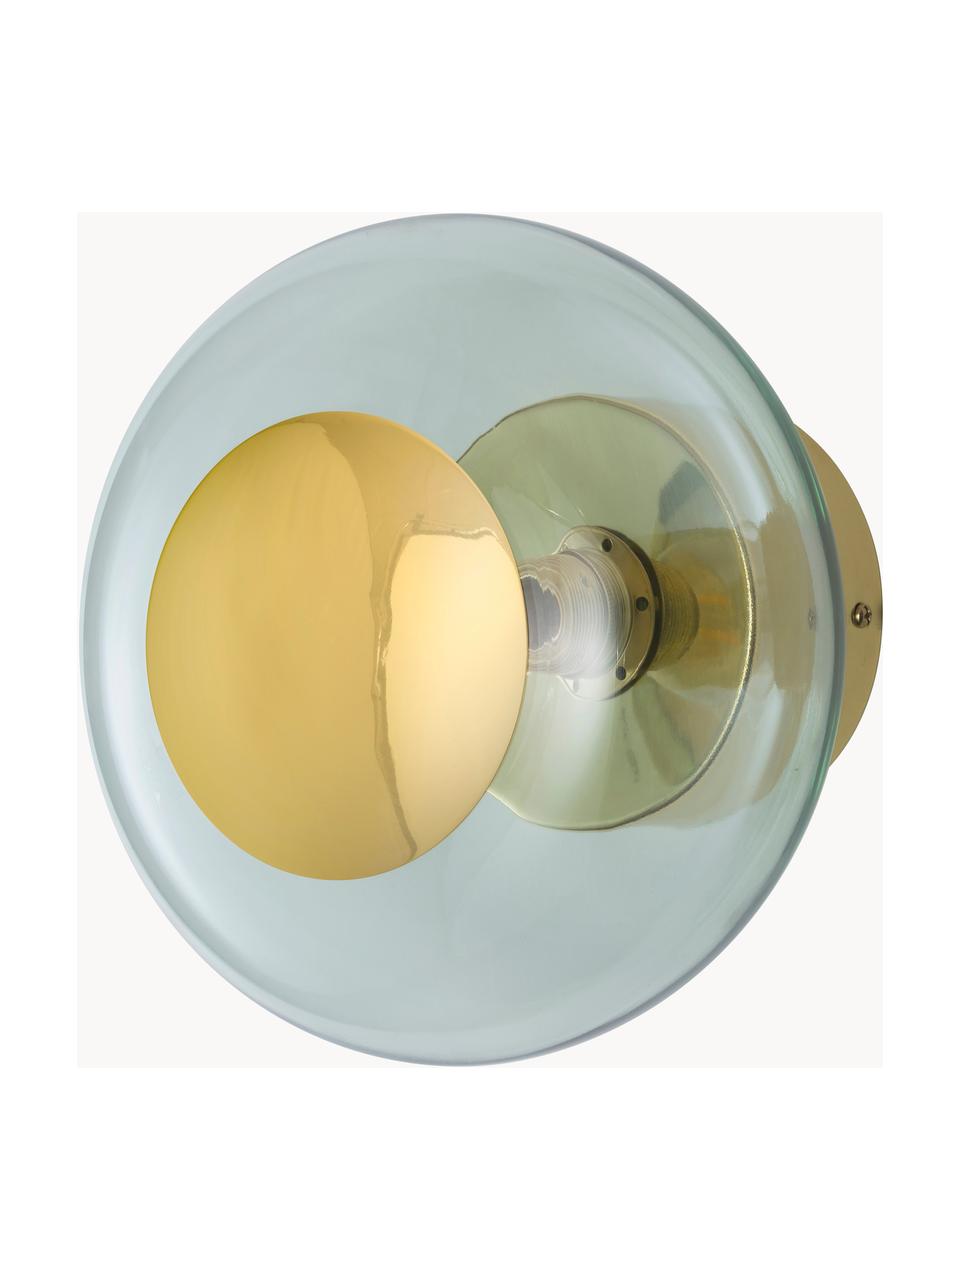 Mondgeblazen wandlamp Horizon, Lampenkap: mondgeblazen glas, Mintgroen, goudkleurig, Ø 21 x D 17 cm